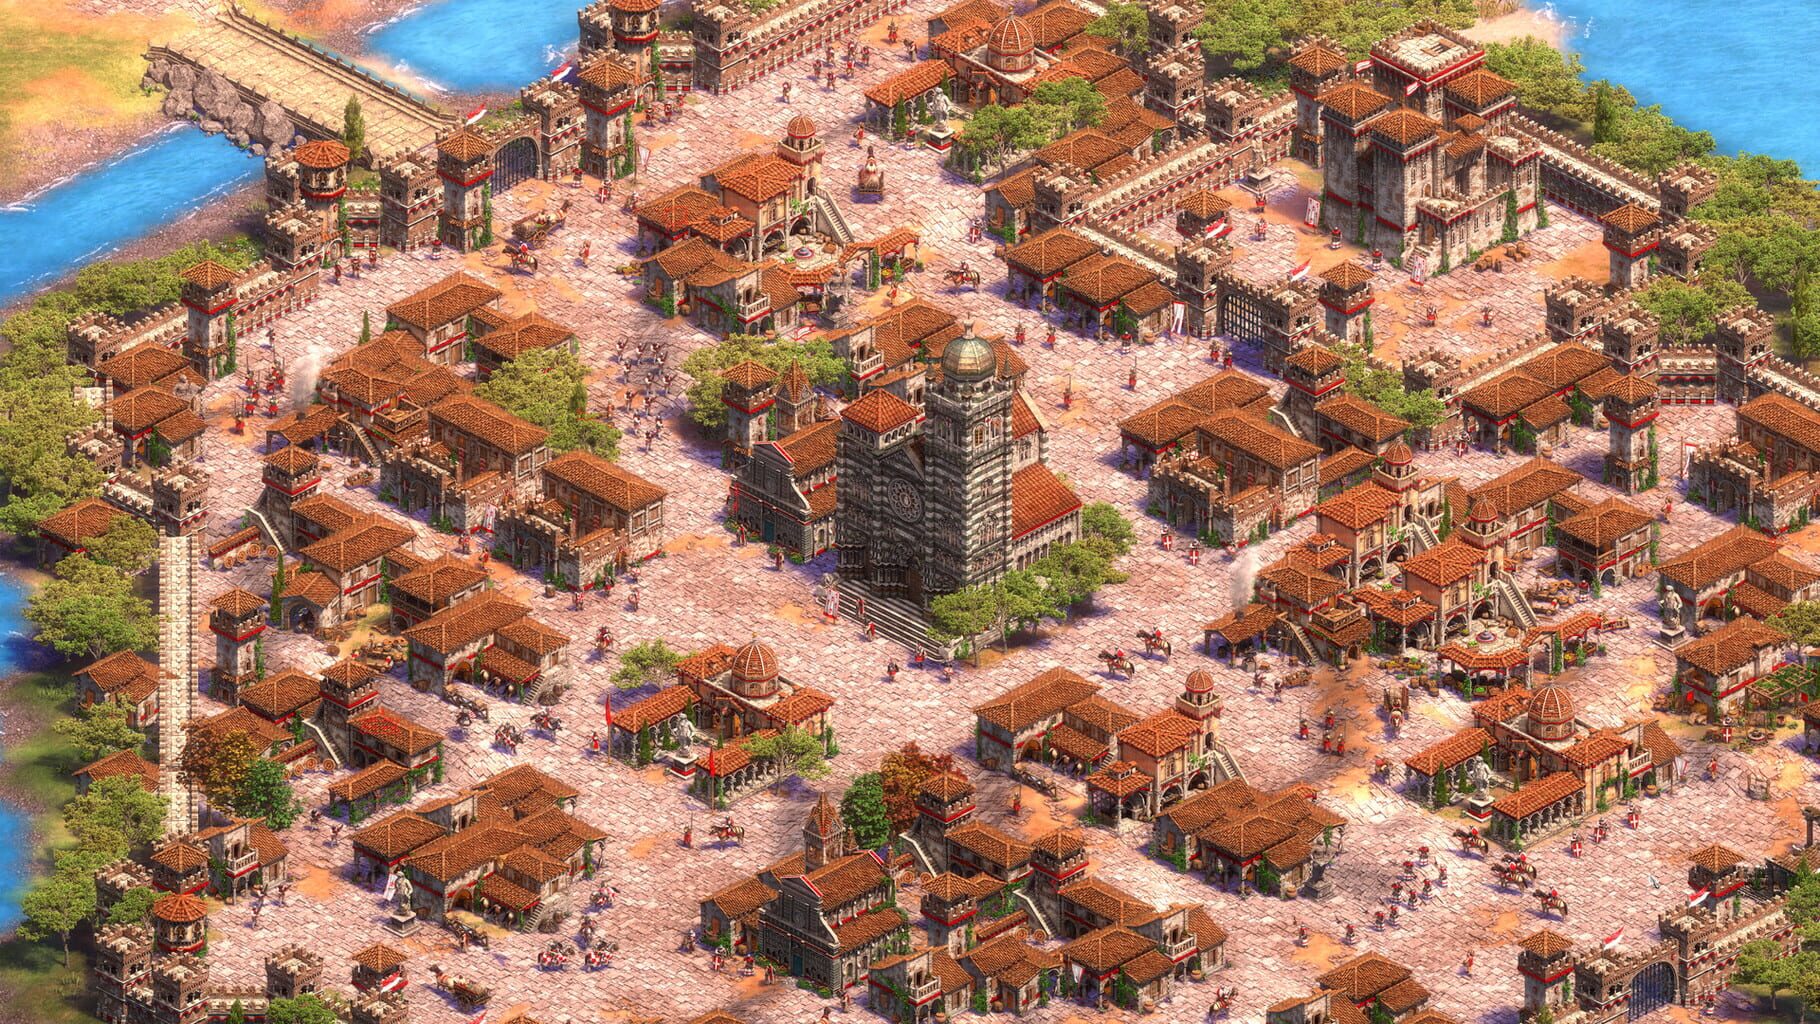 Age of Empires II: Definitive Edition screenshots